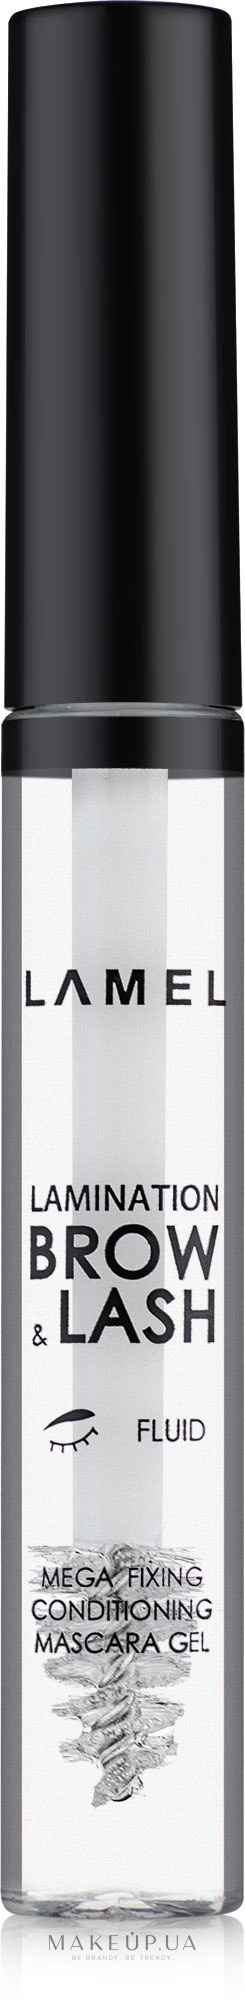 LAMEL Make Up Lamination Brow & Lash